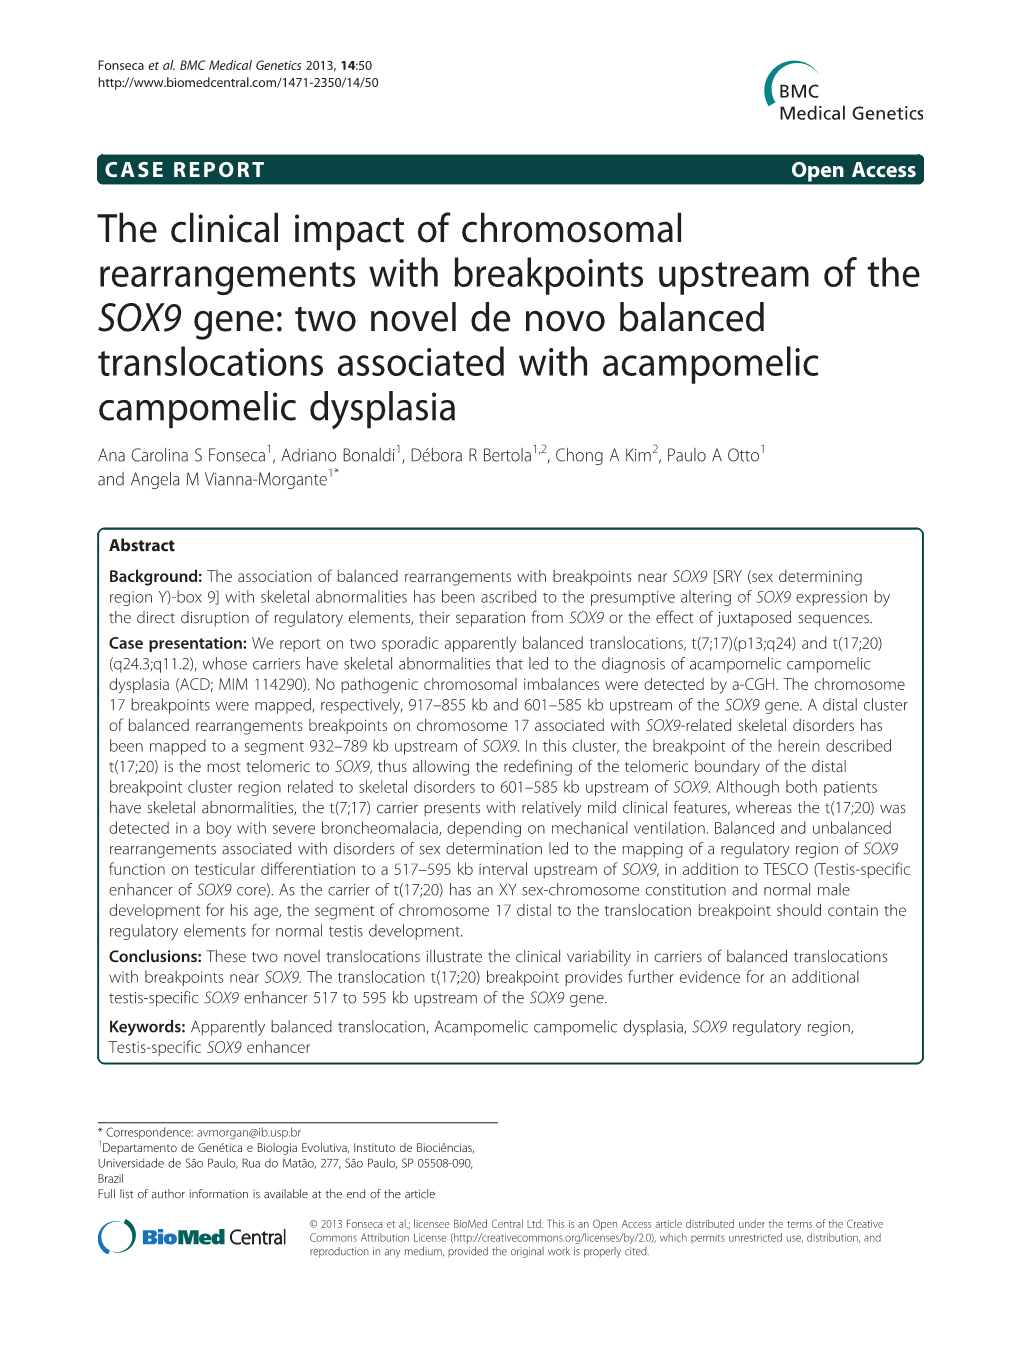 The Clinical Impact of Chromosomal